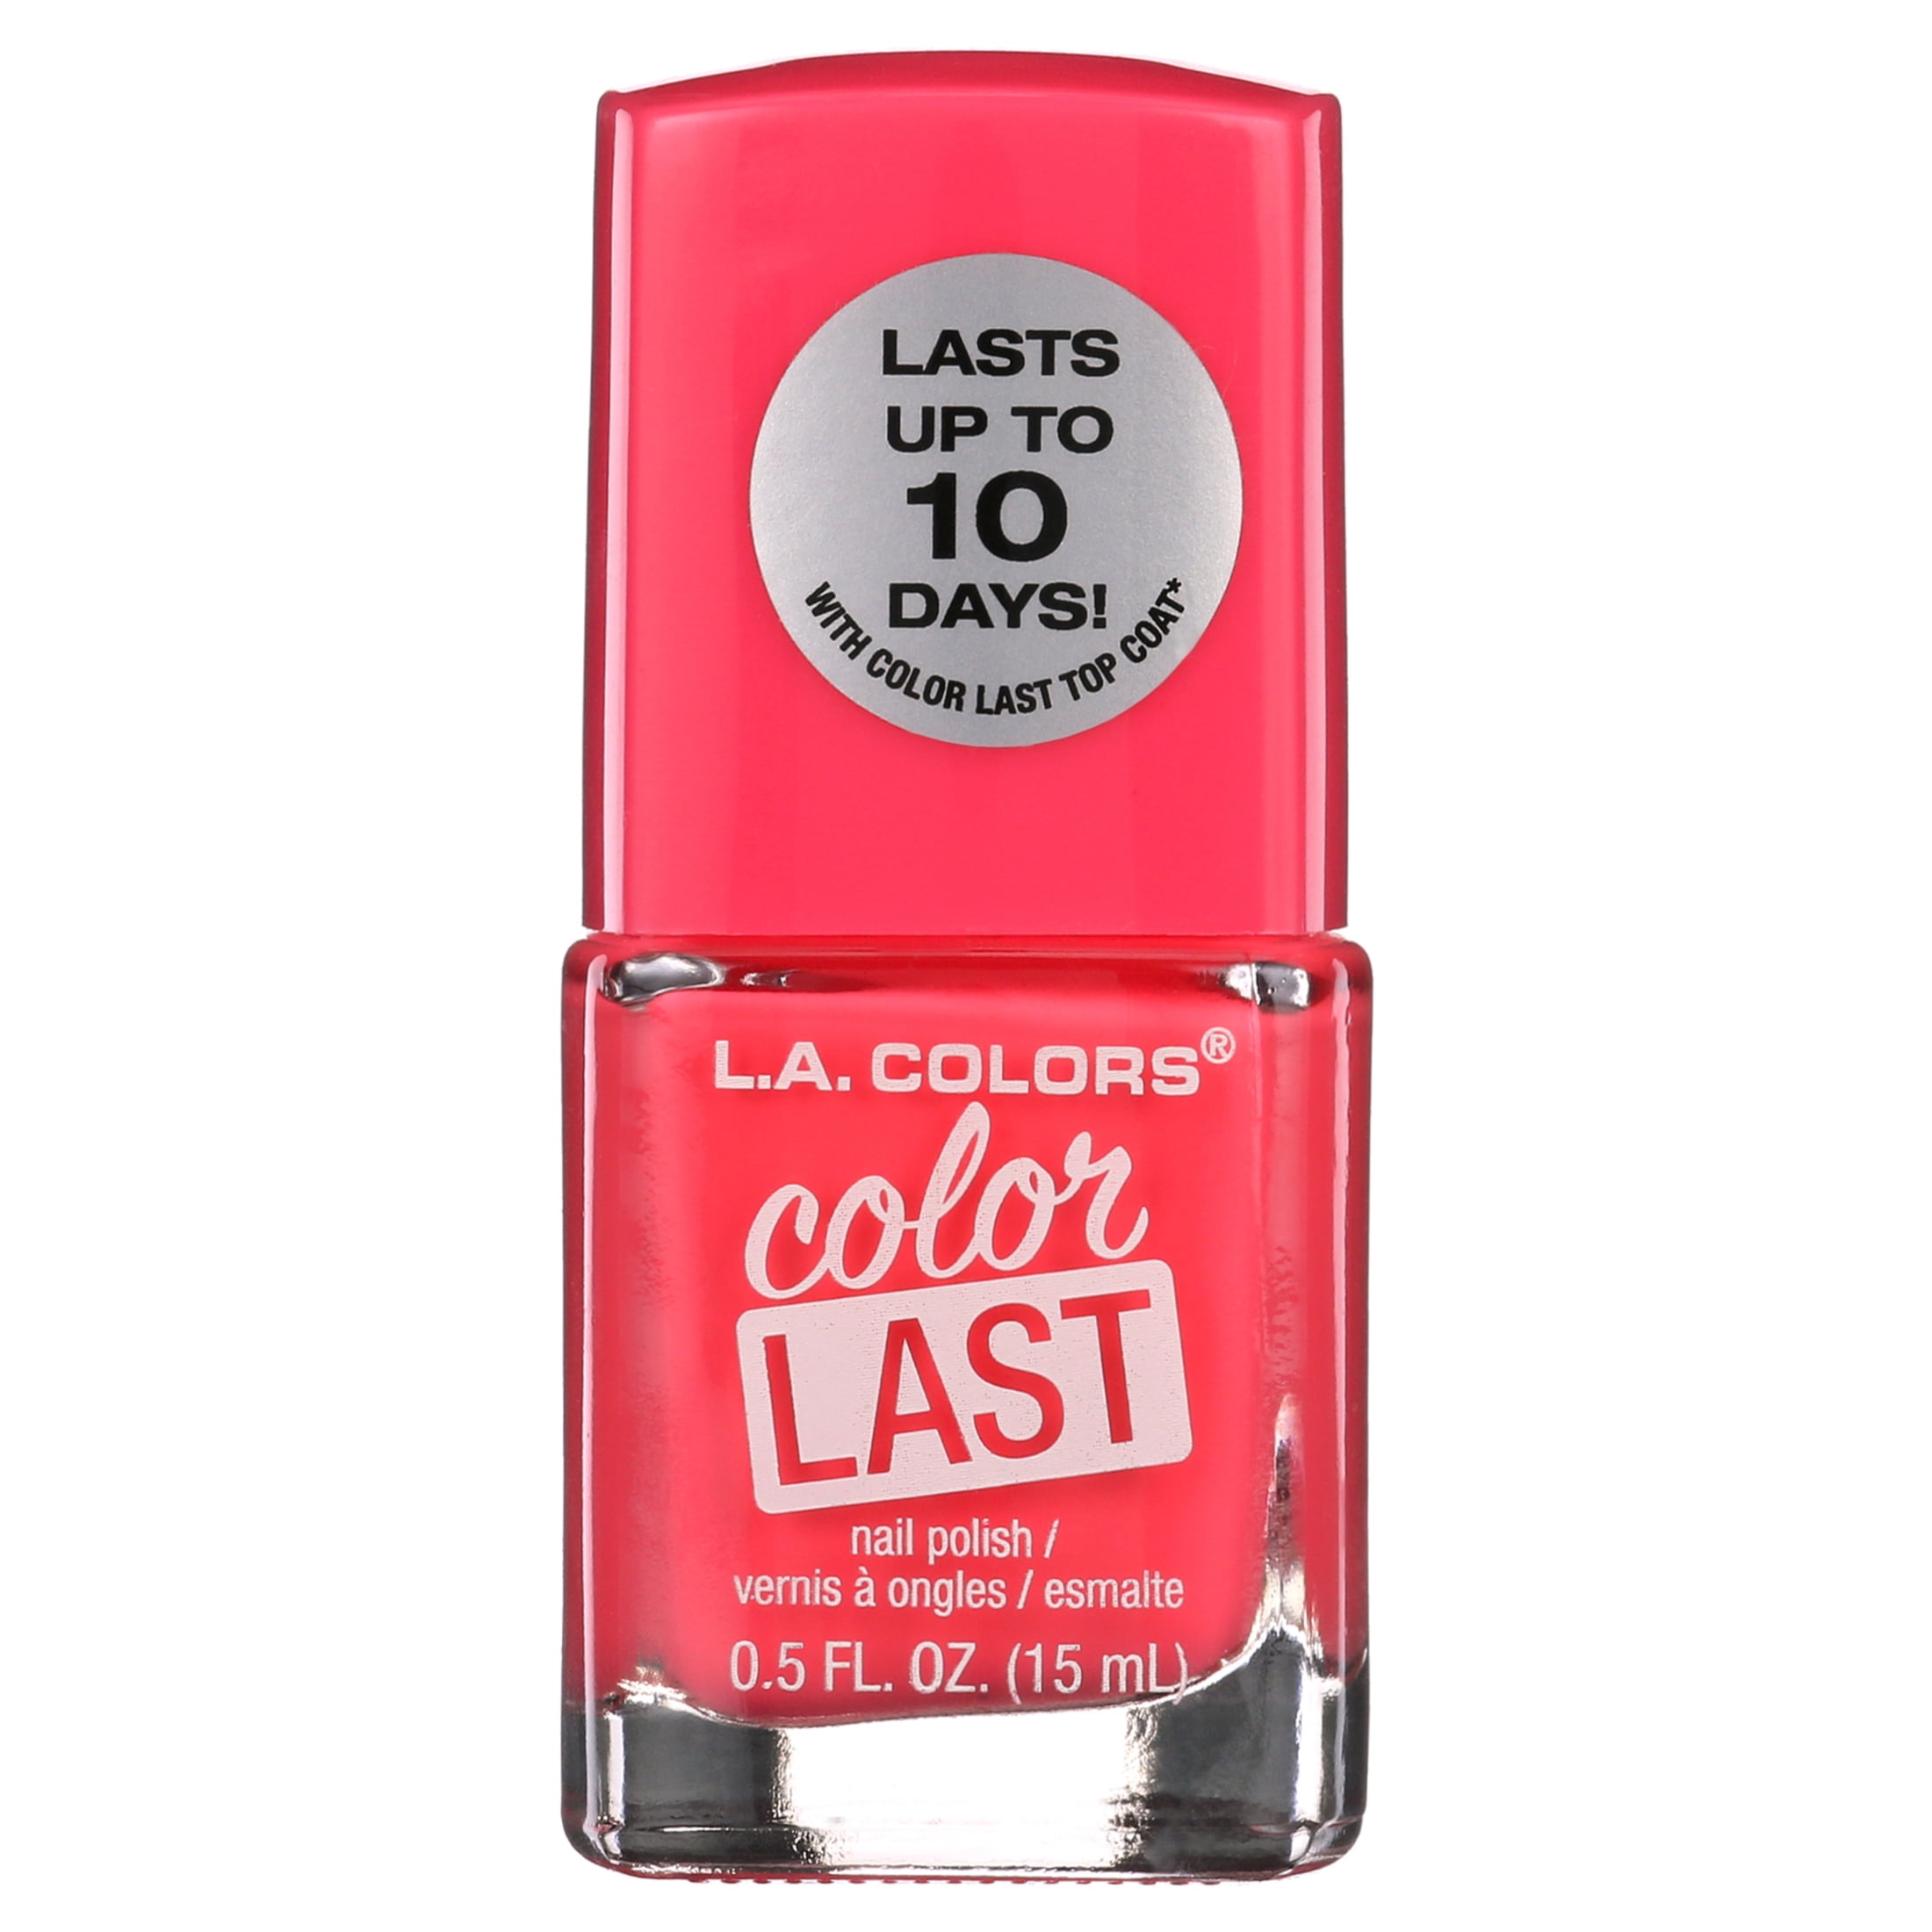 L.A. COLORS Color Last Nail Polish, Never Ending, 0.5 fl oz